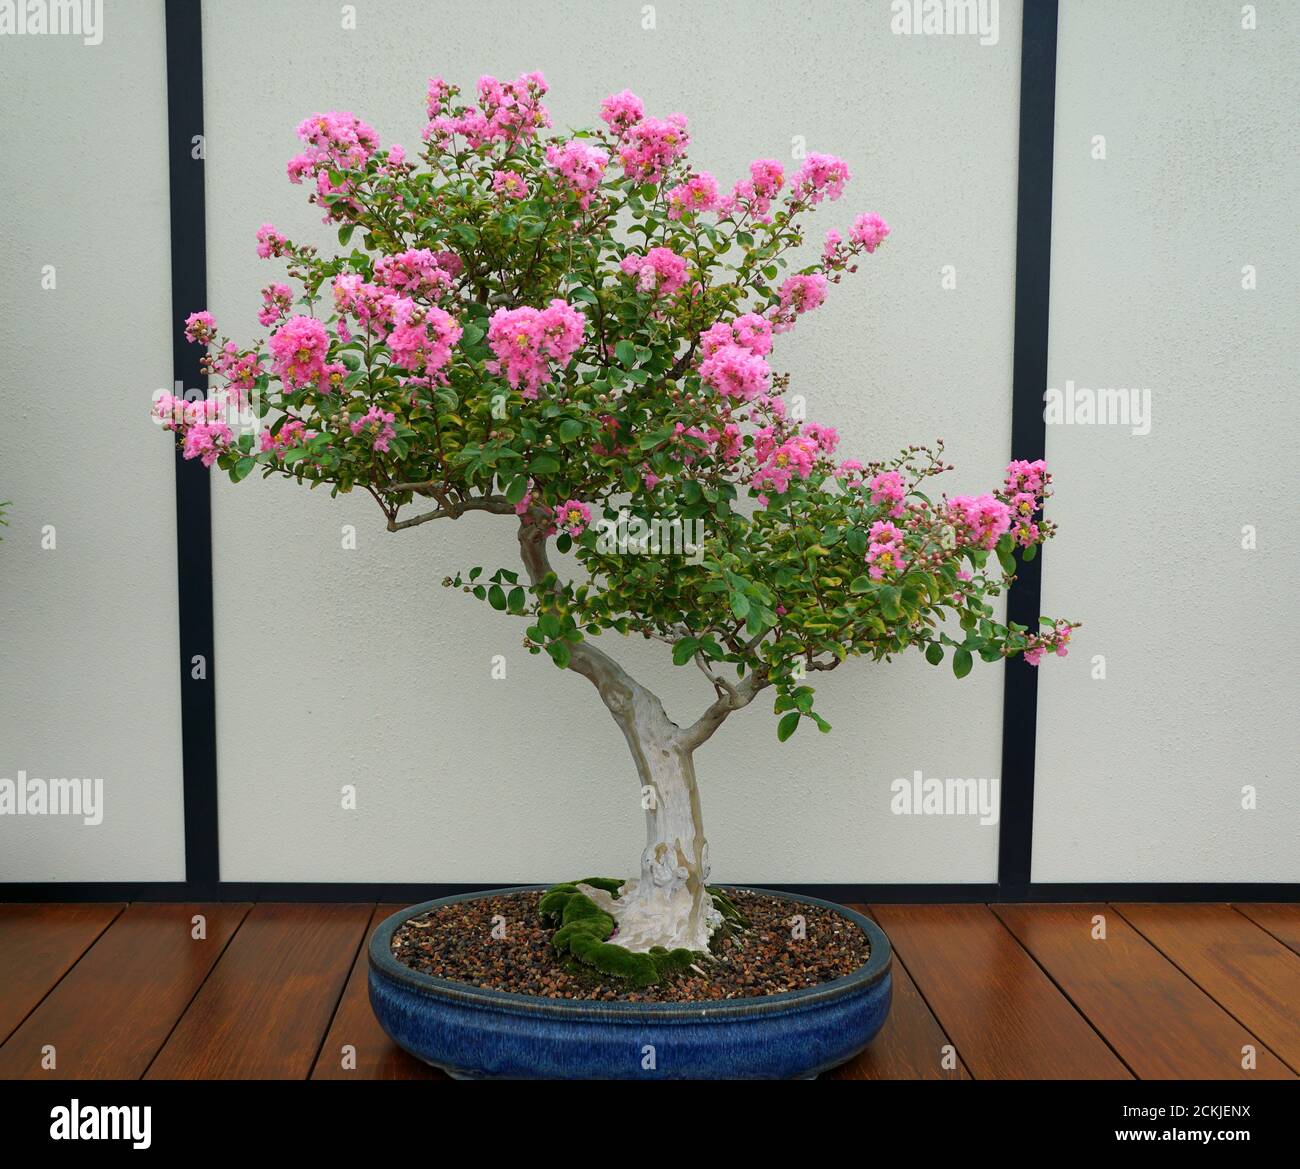 A crape-myrtle bonsai tree with light pink flowers inside a ceramic pot  Stock Photo - Alamy